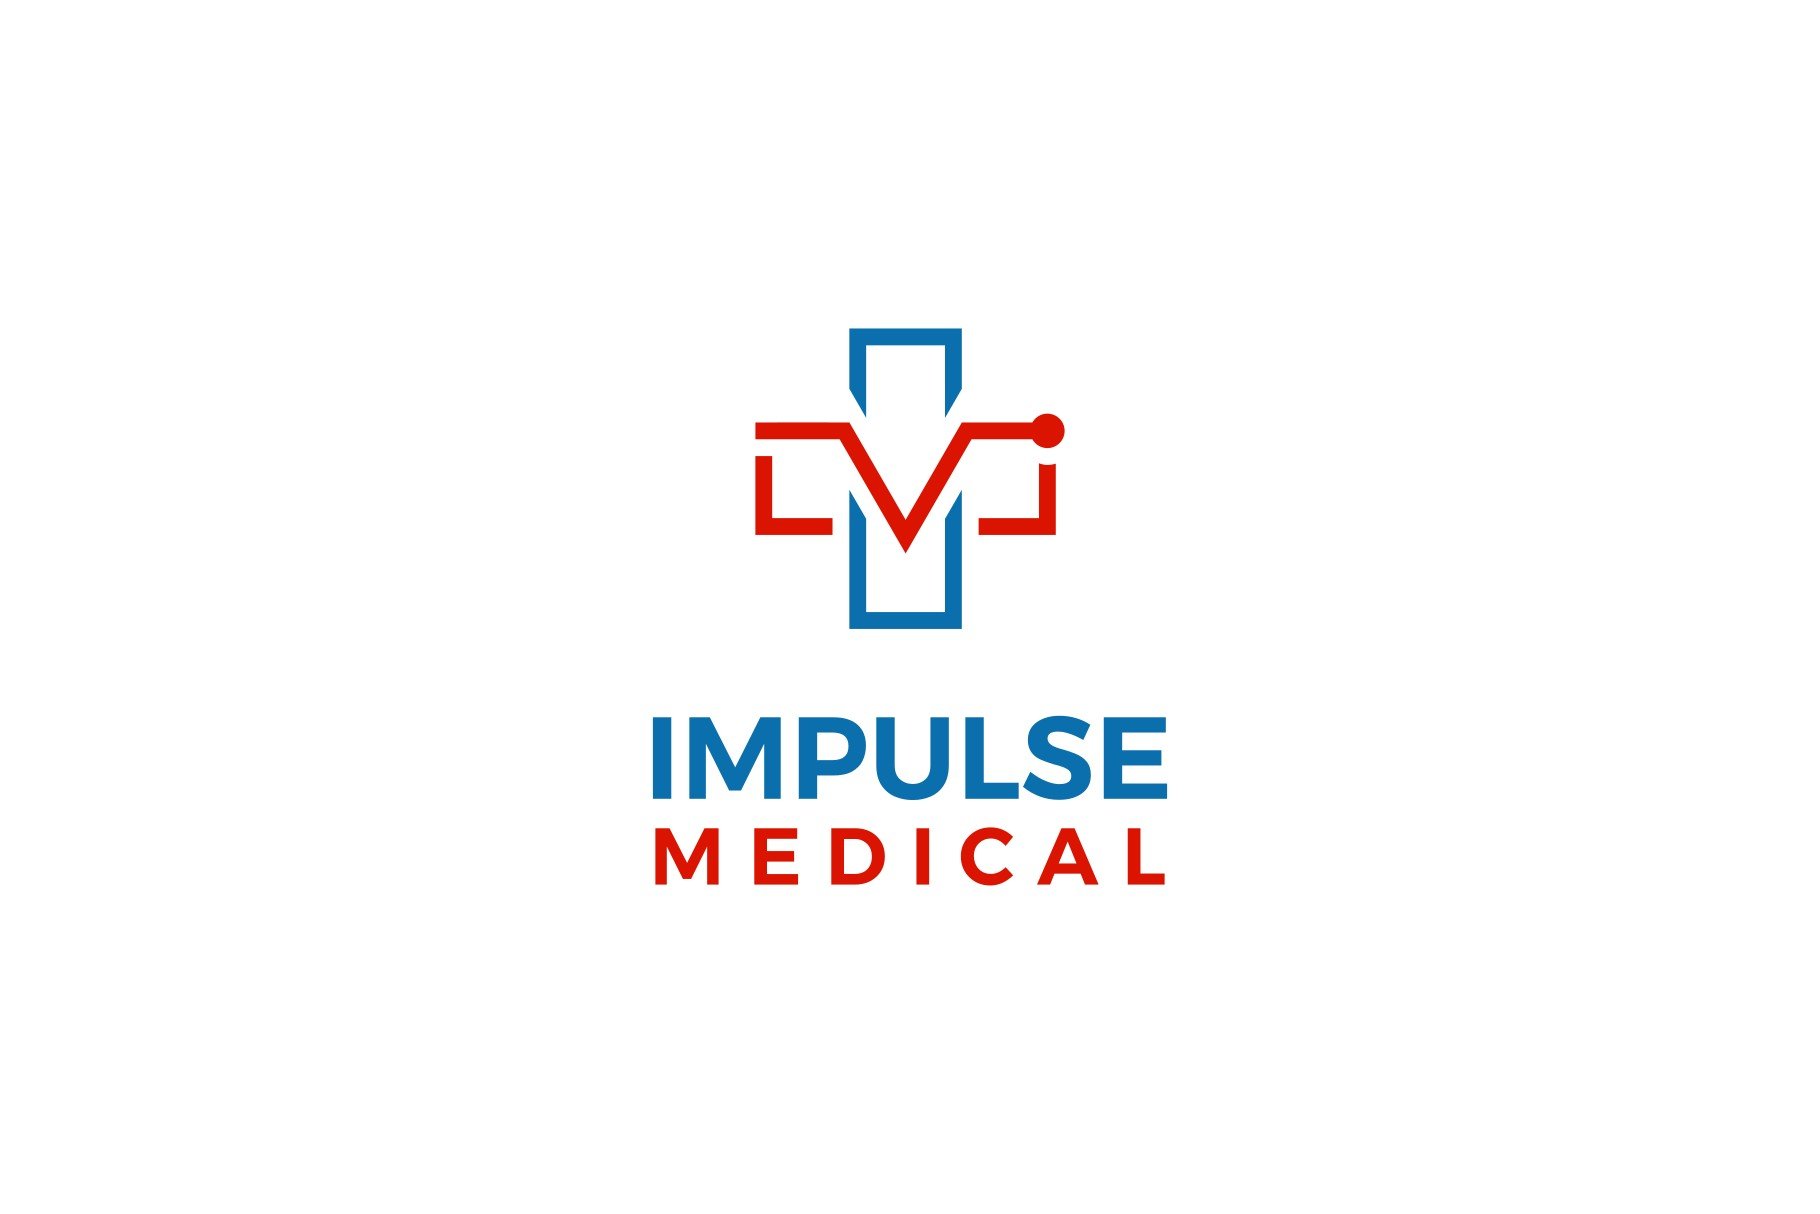 IM Initial Medical Health logo cover image.